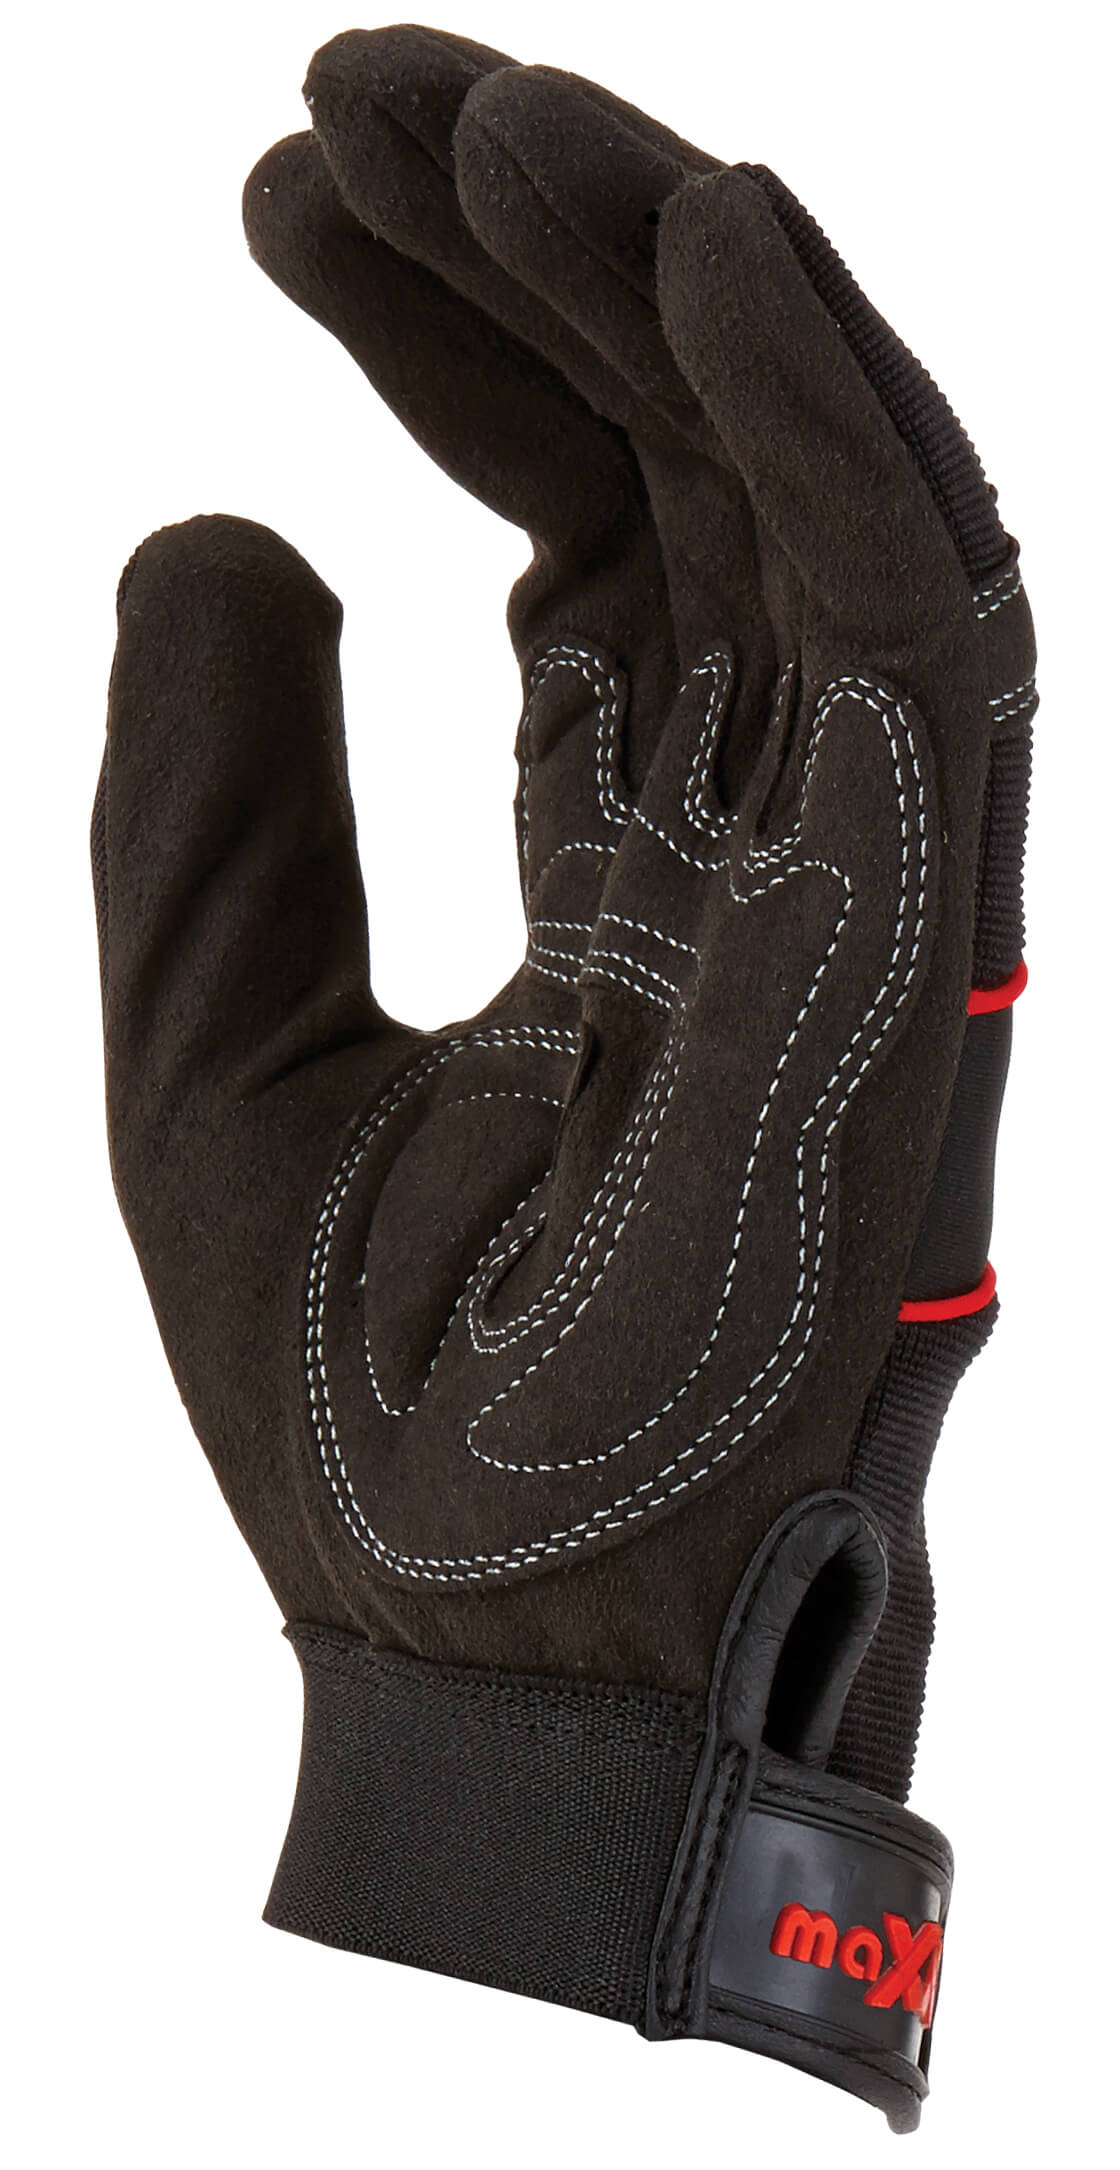 GMA113a G-Force Mechanics Glove